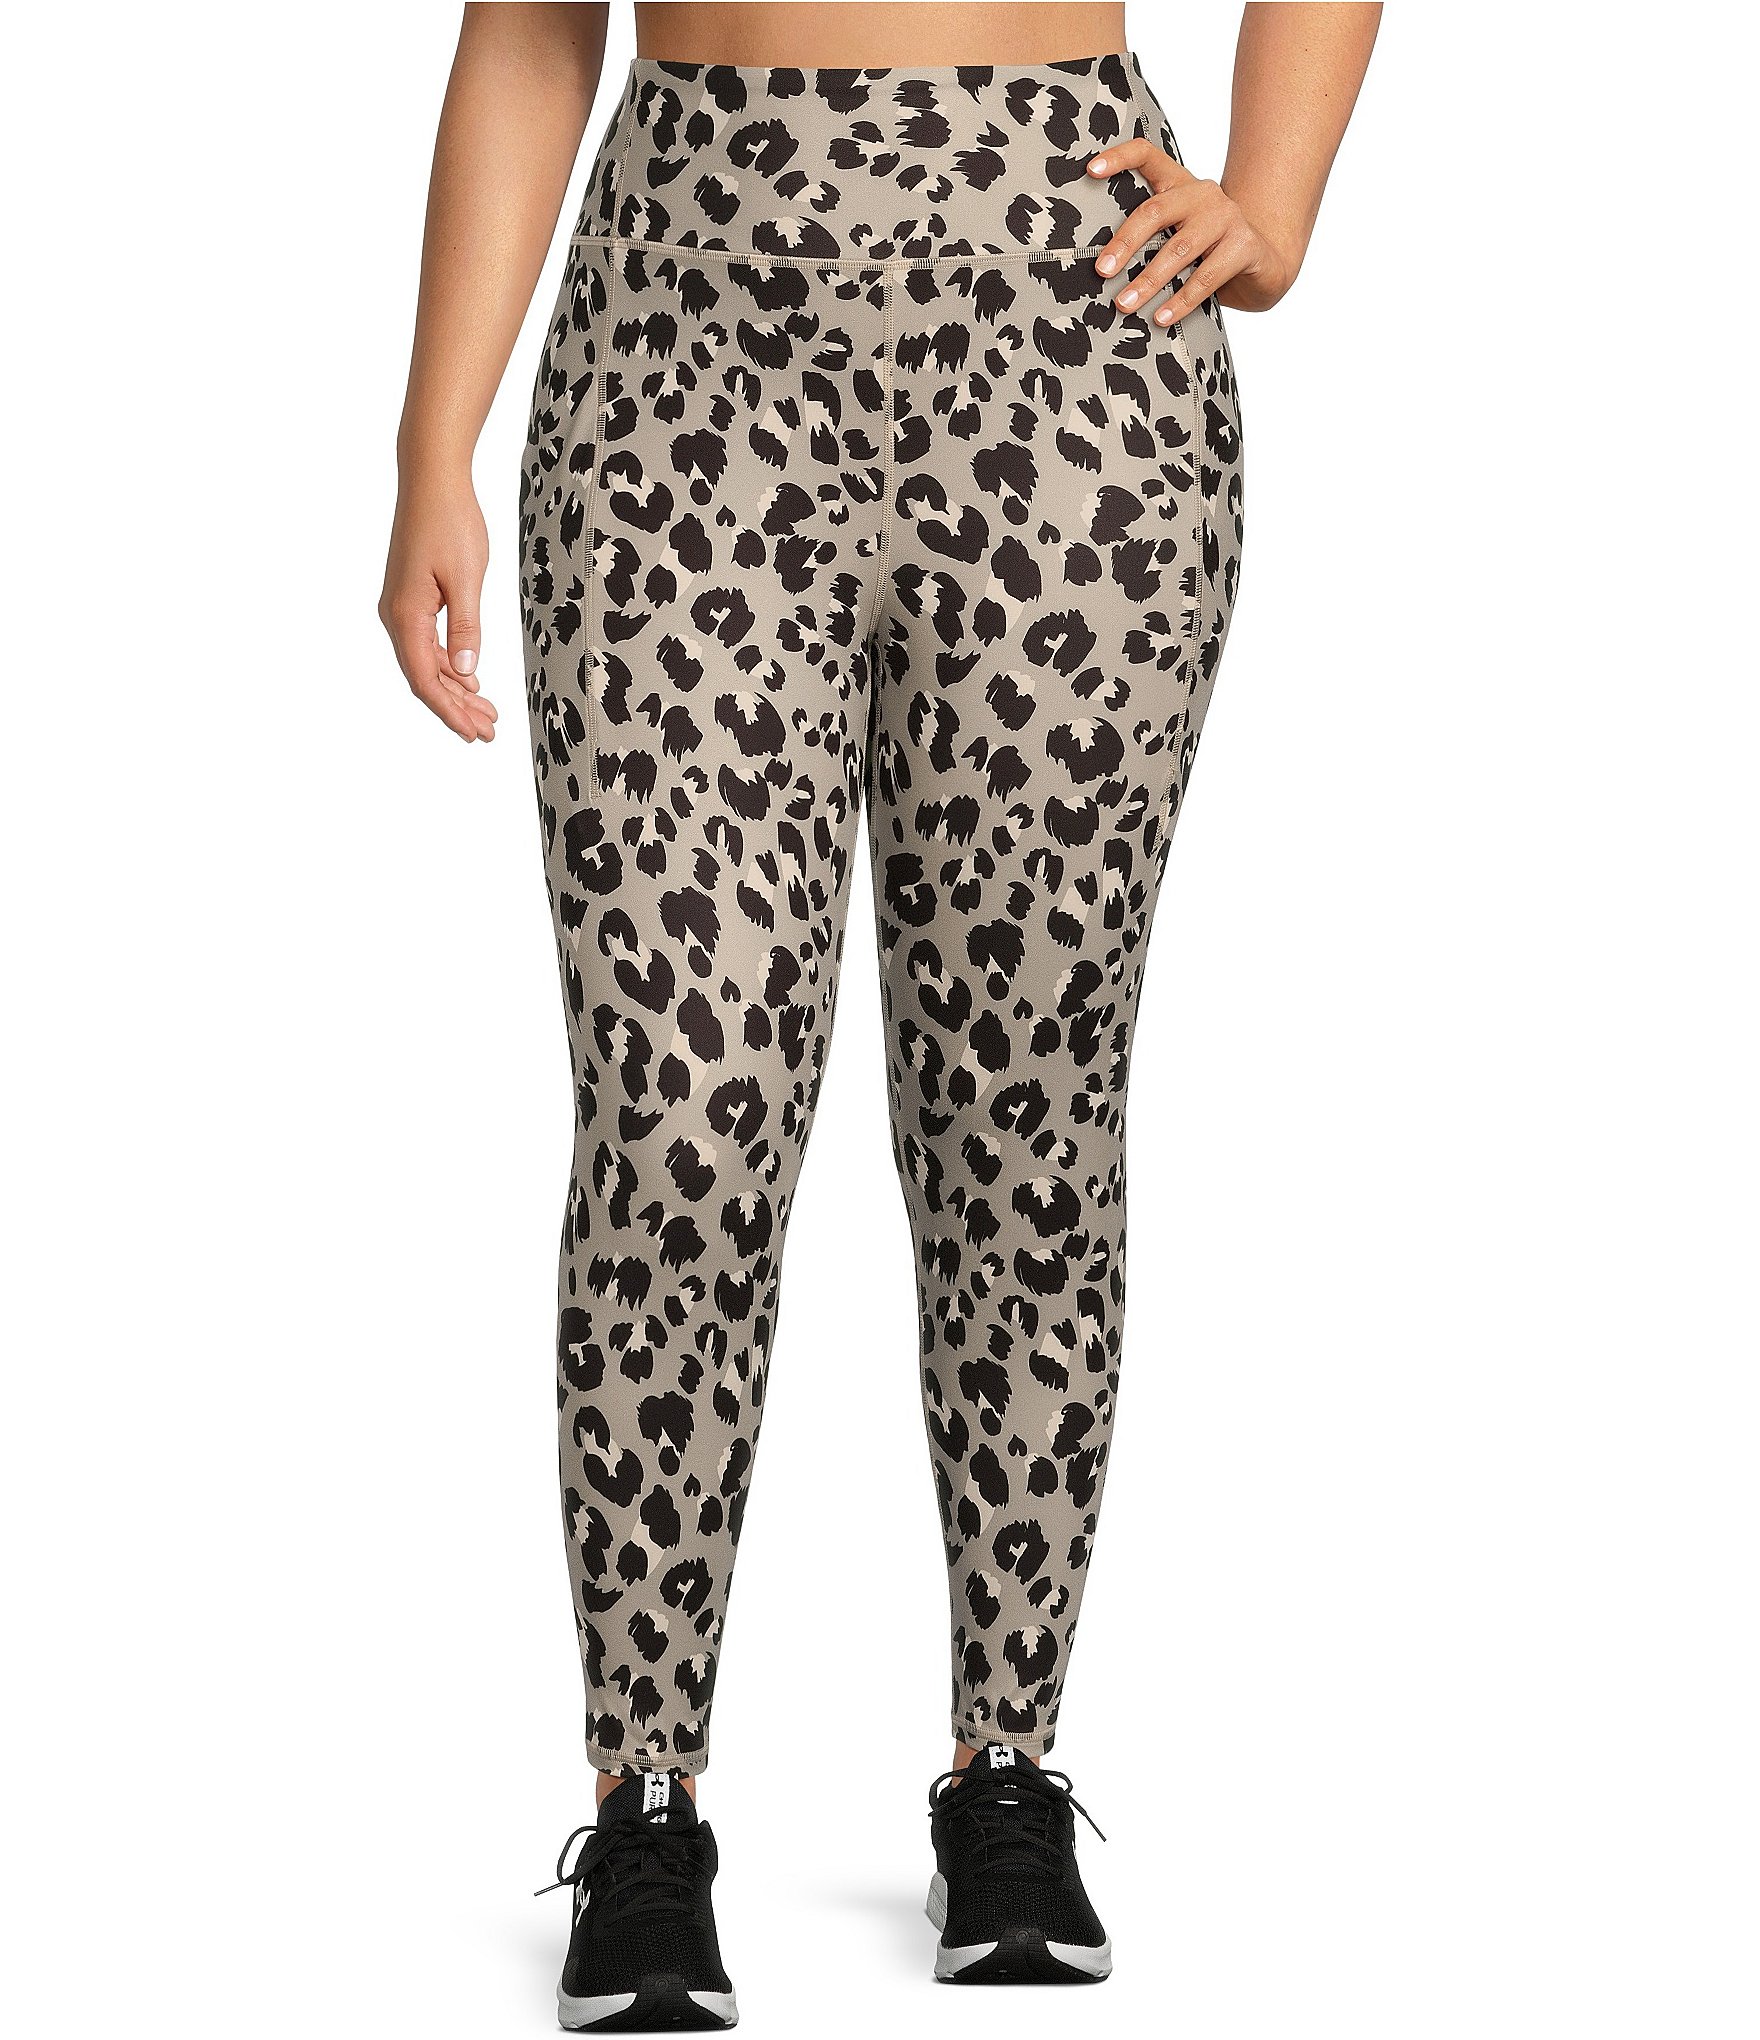 Womens Plus Size Yoga Pants Black Cheetah 2X